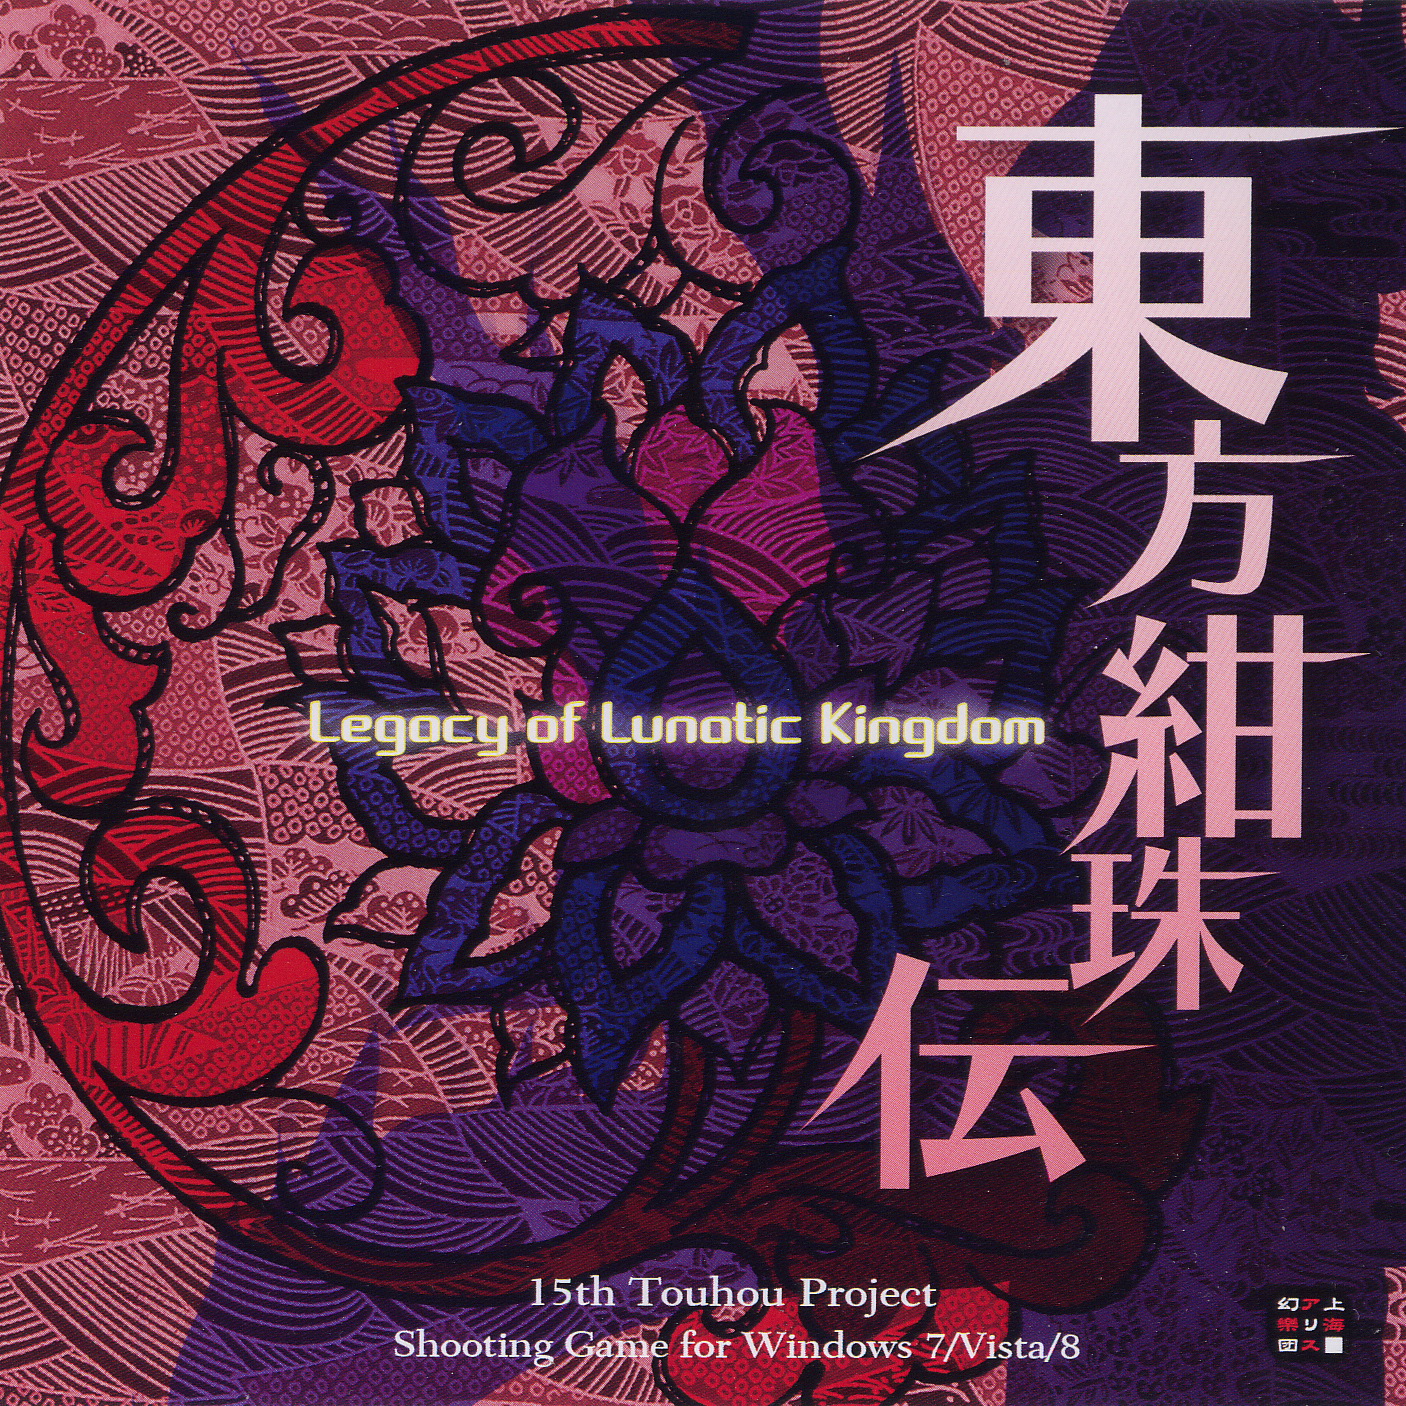 [自己動手豐衣足食](上海アリス幻樂団)東方紺珠伝 ～ Legacy of Lunatic Kingdom